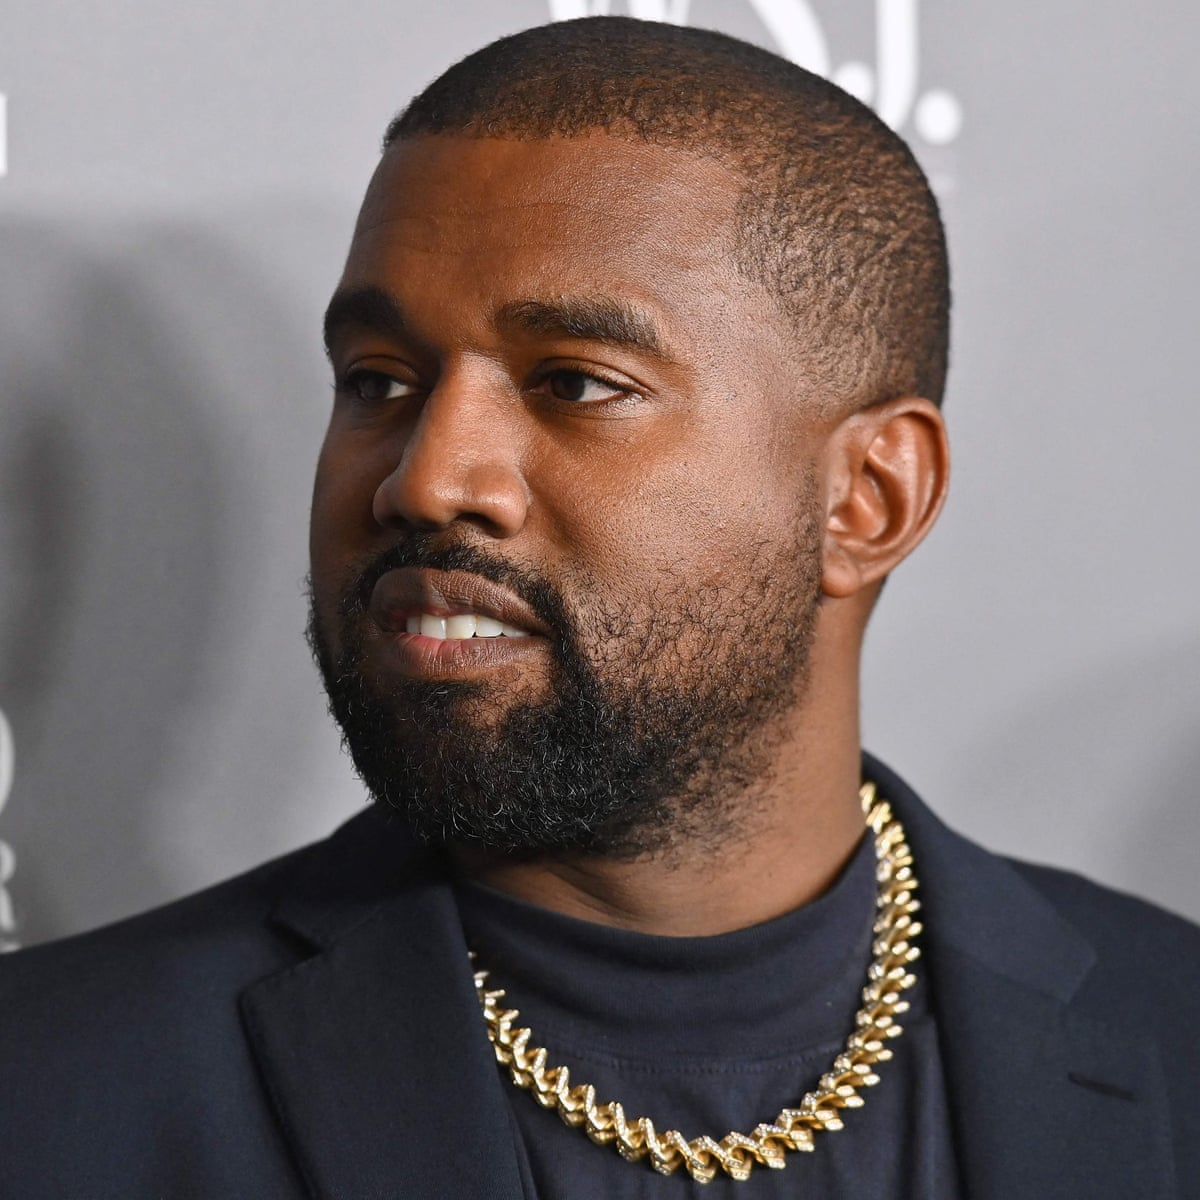 Listen to Kanye West's XXXTentacion collaboration 'True Love